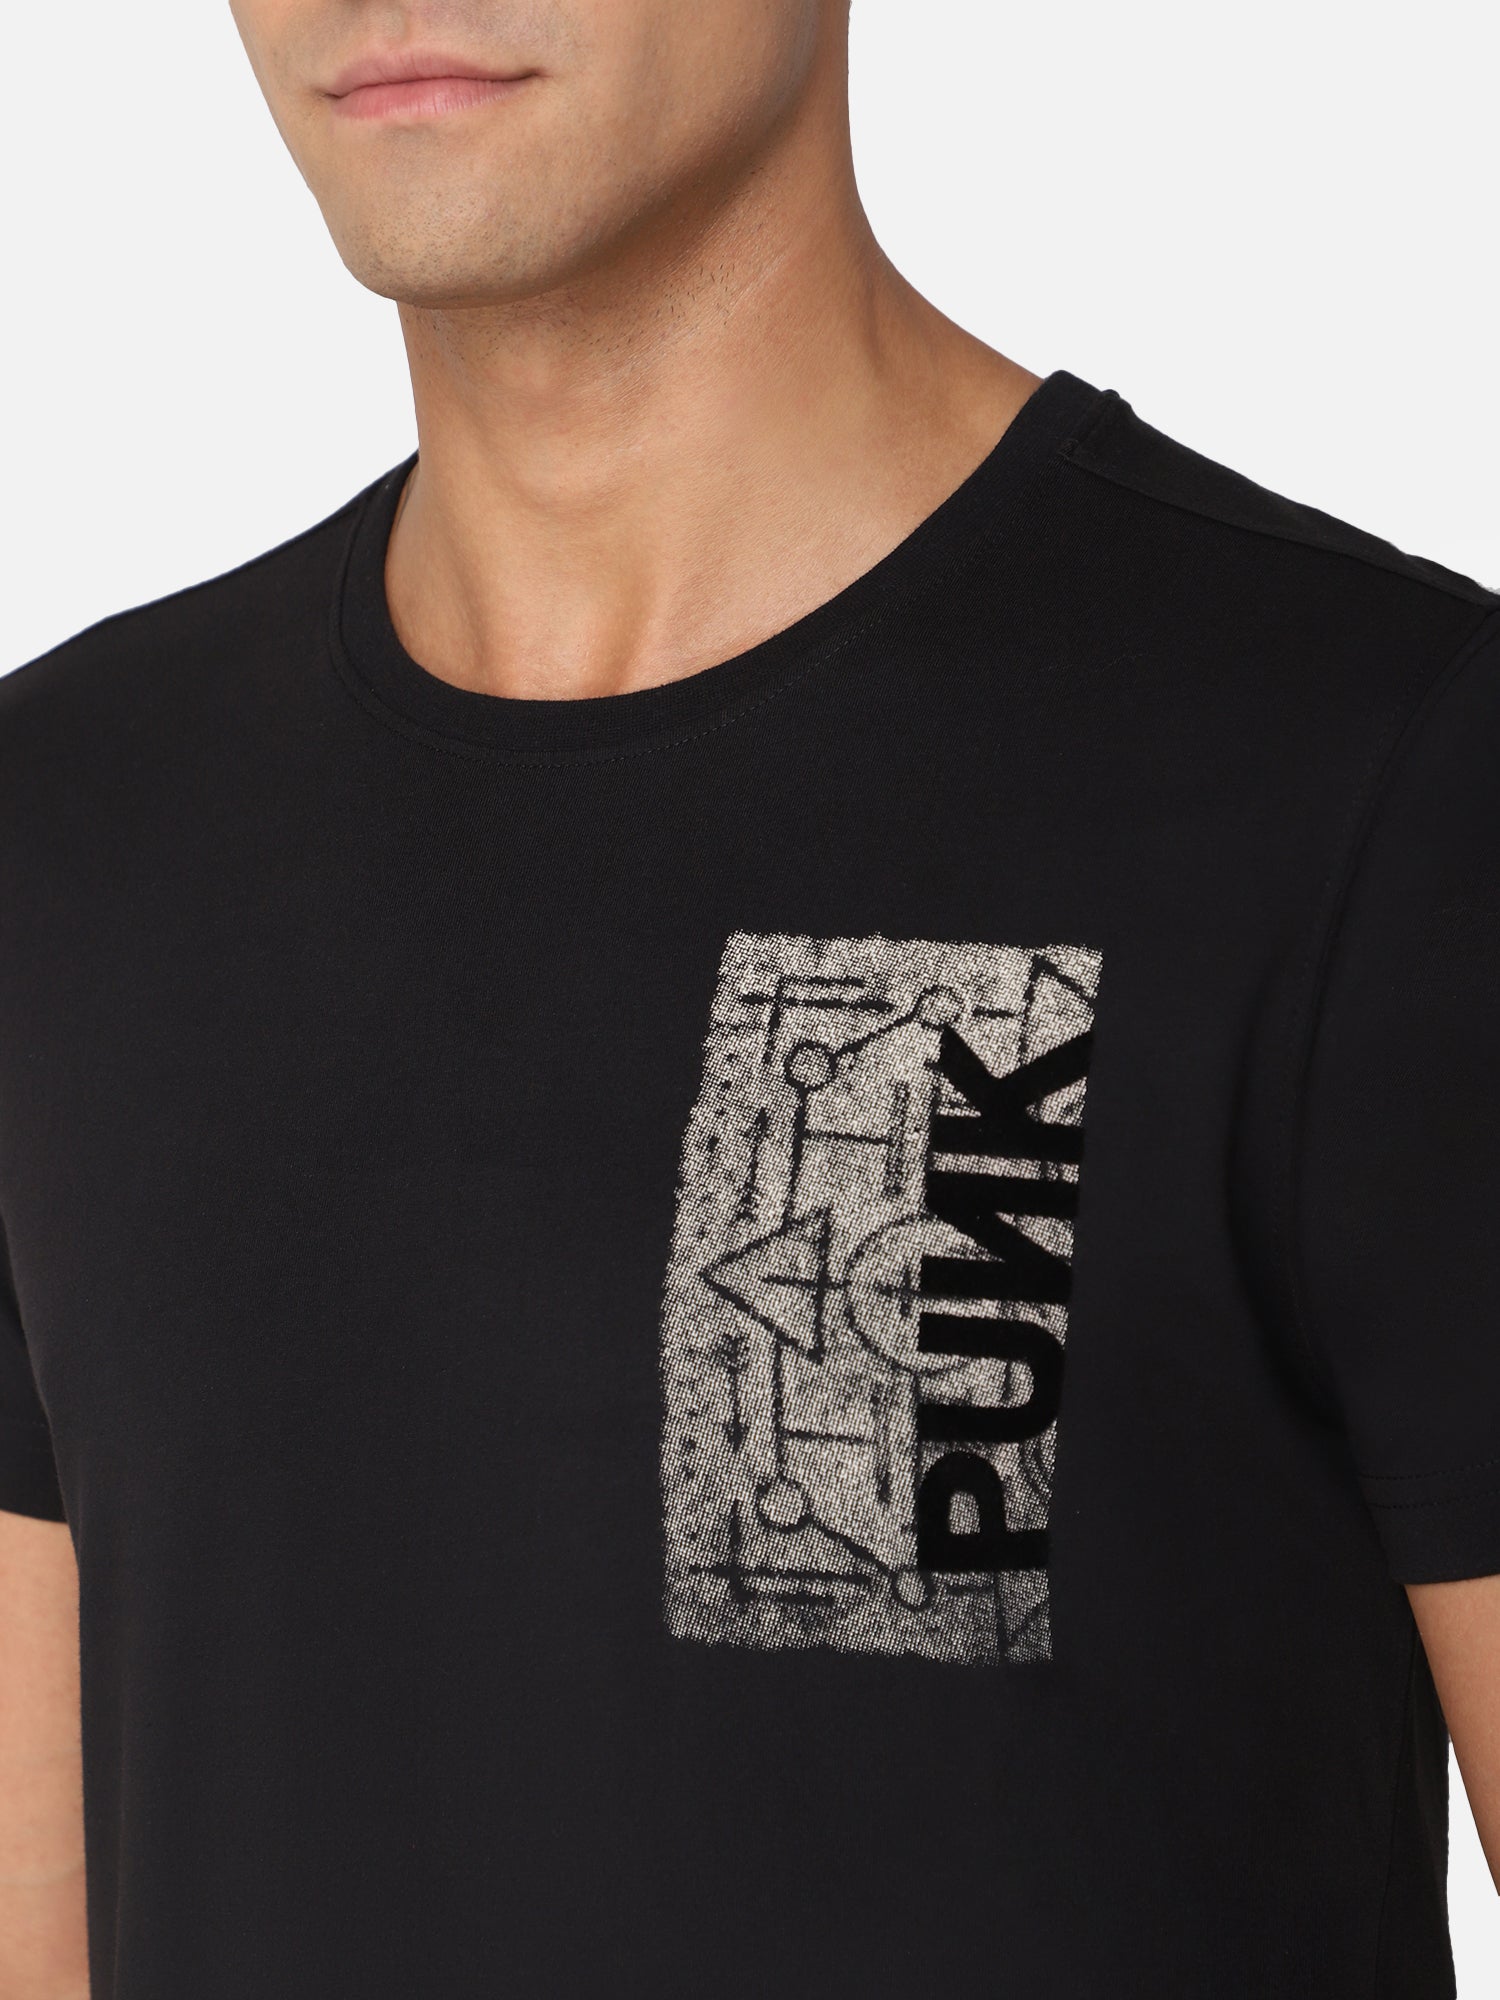 Punk NAZCA-SKULL Black T-shirt